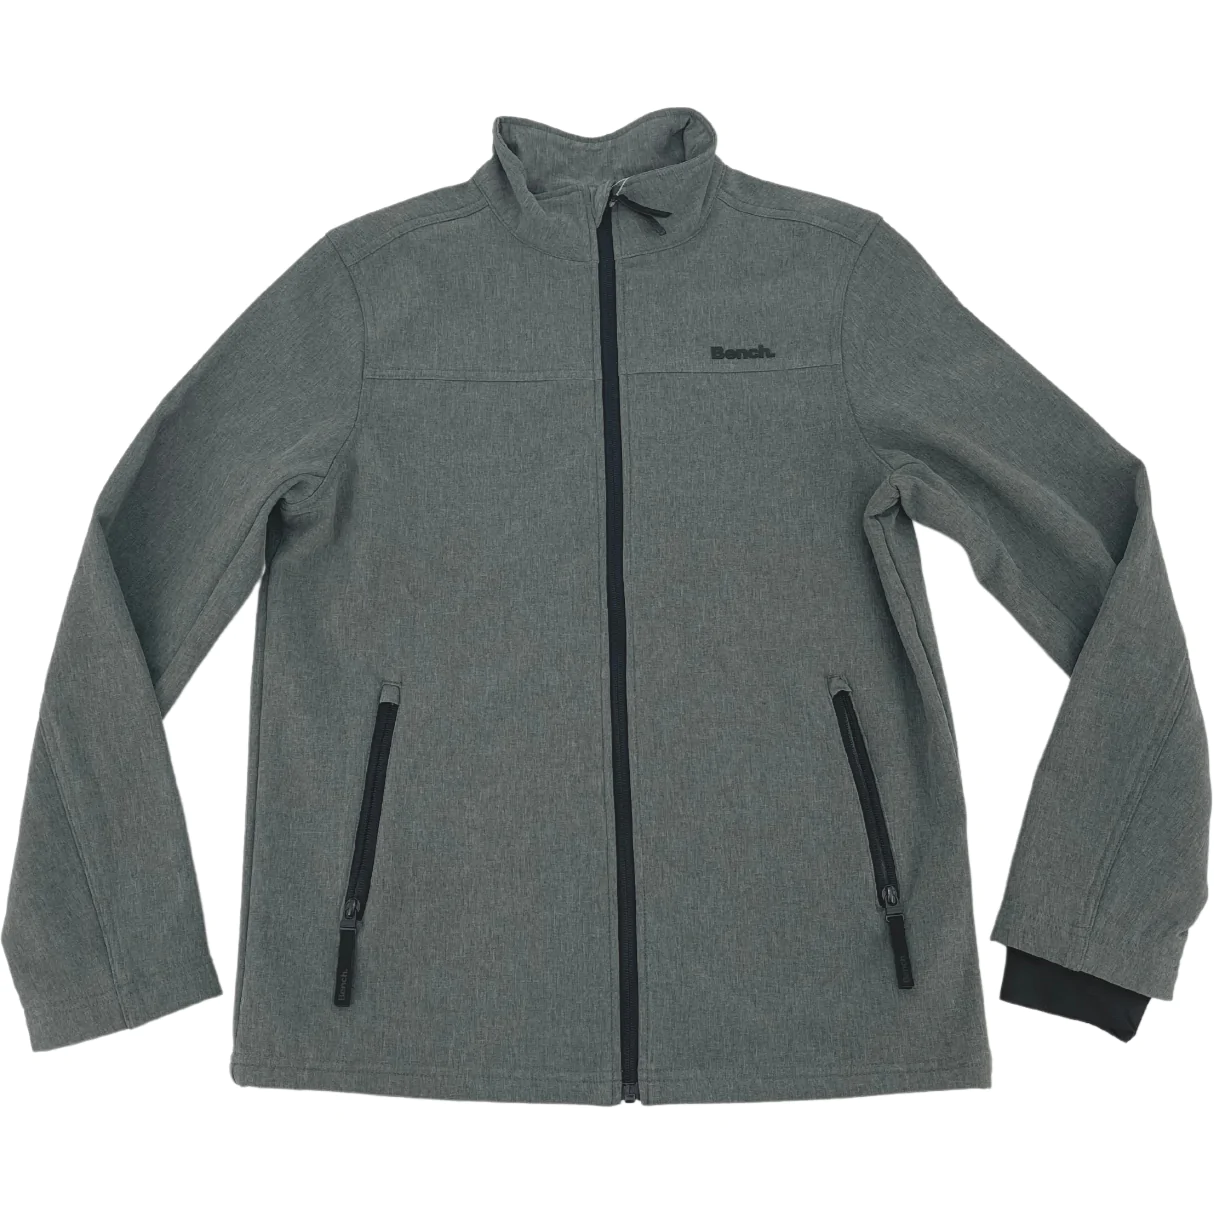 Bench Men's Soft Shell Jacket / Grey / Various Sizes